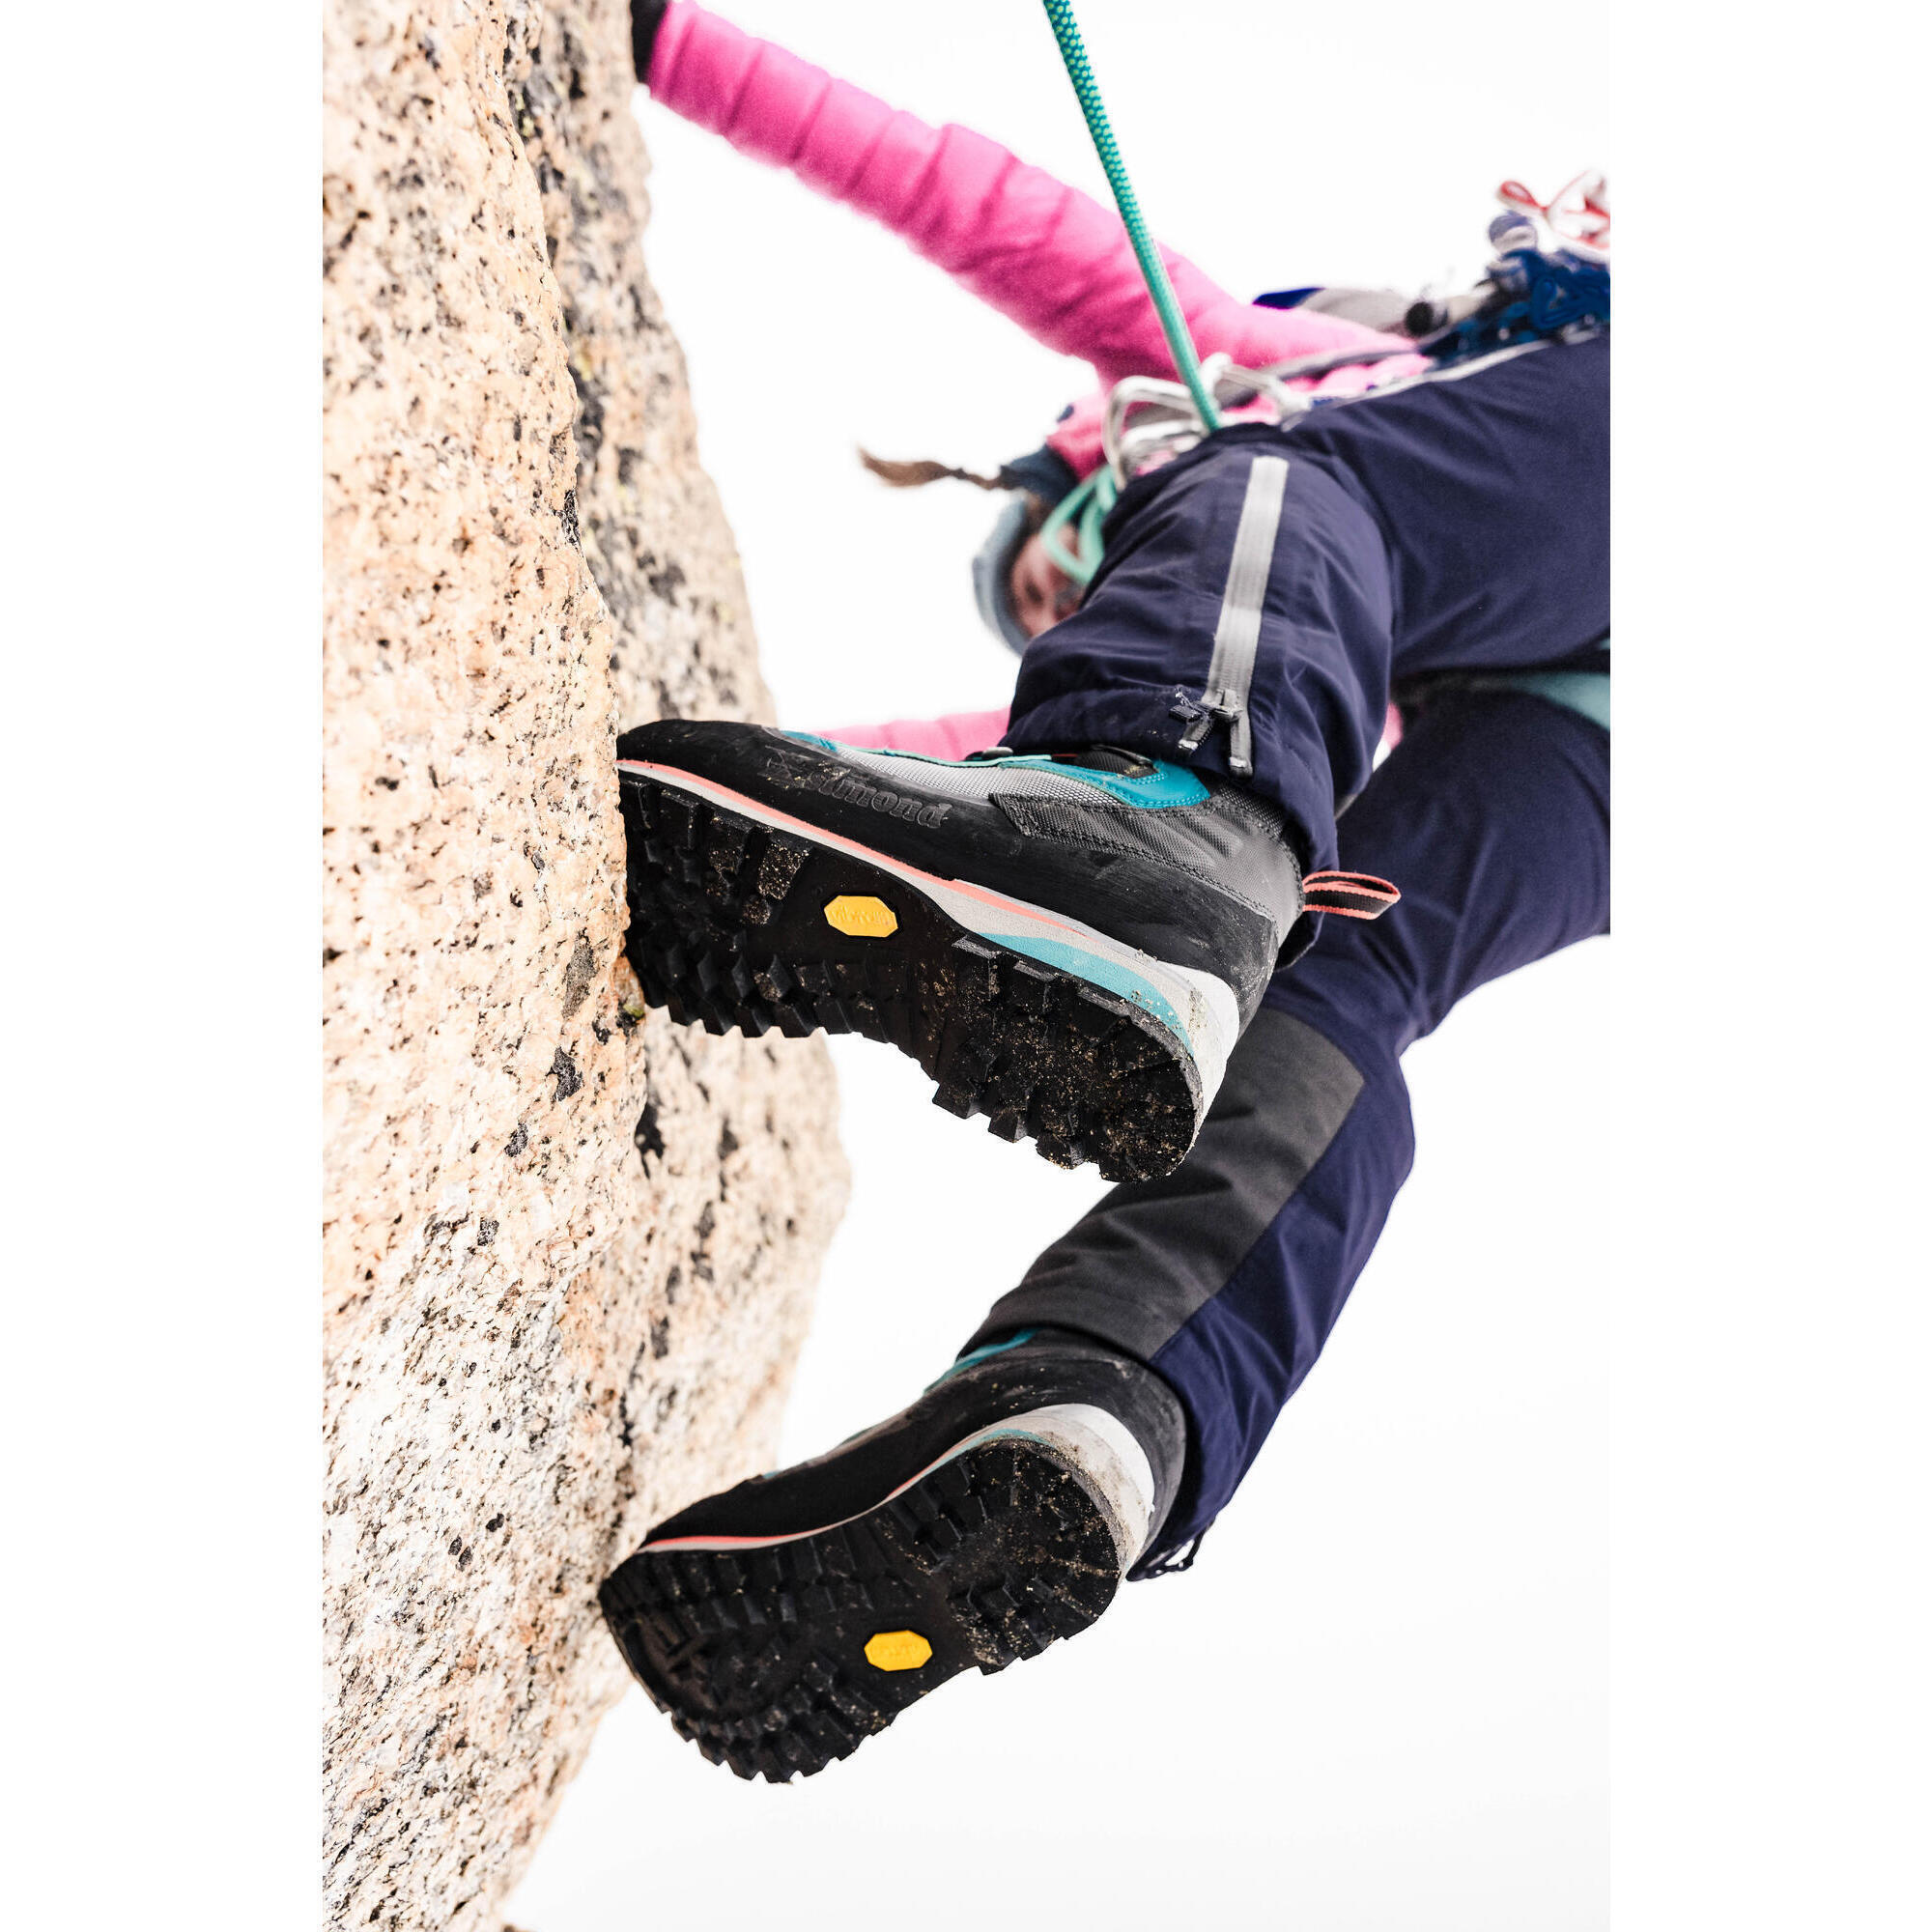 Women's 3 seasons mountaineering boots - ALPINISM LIGHT turquoise 5/16